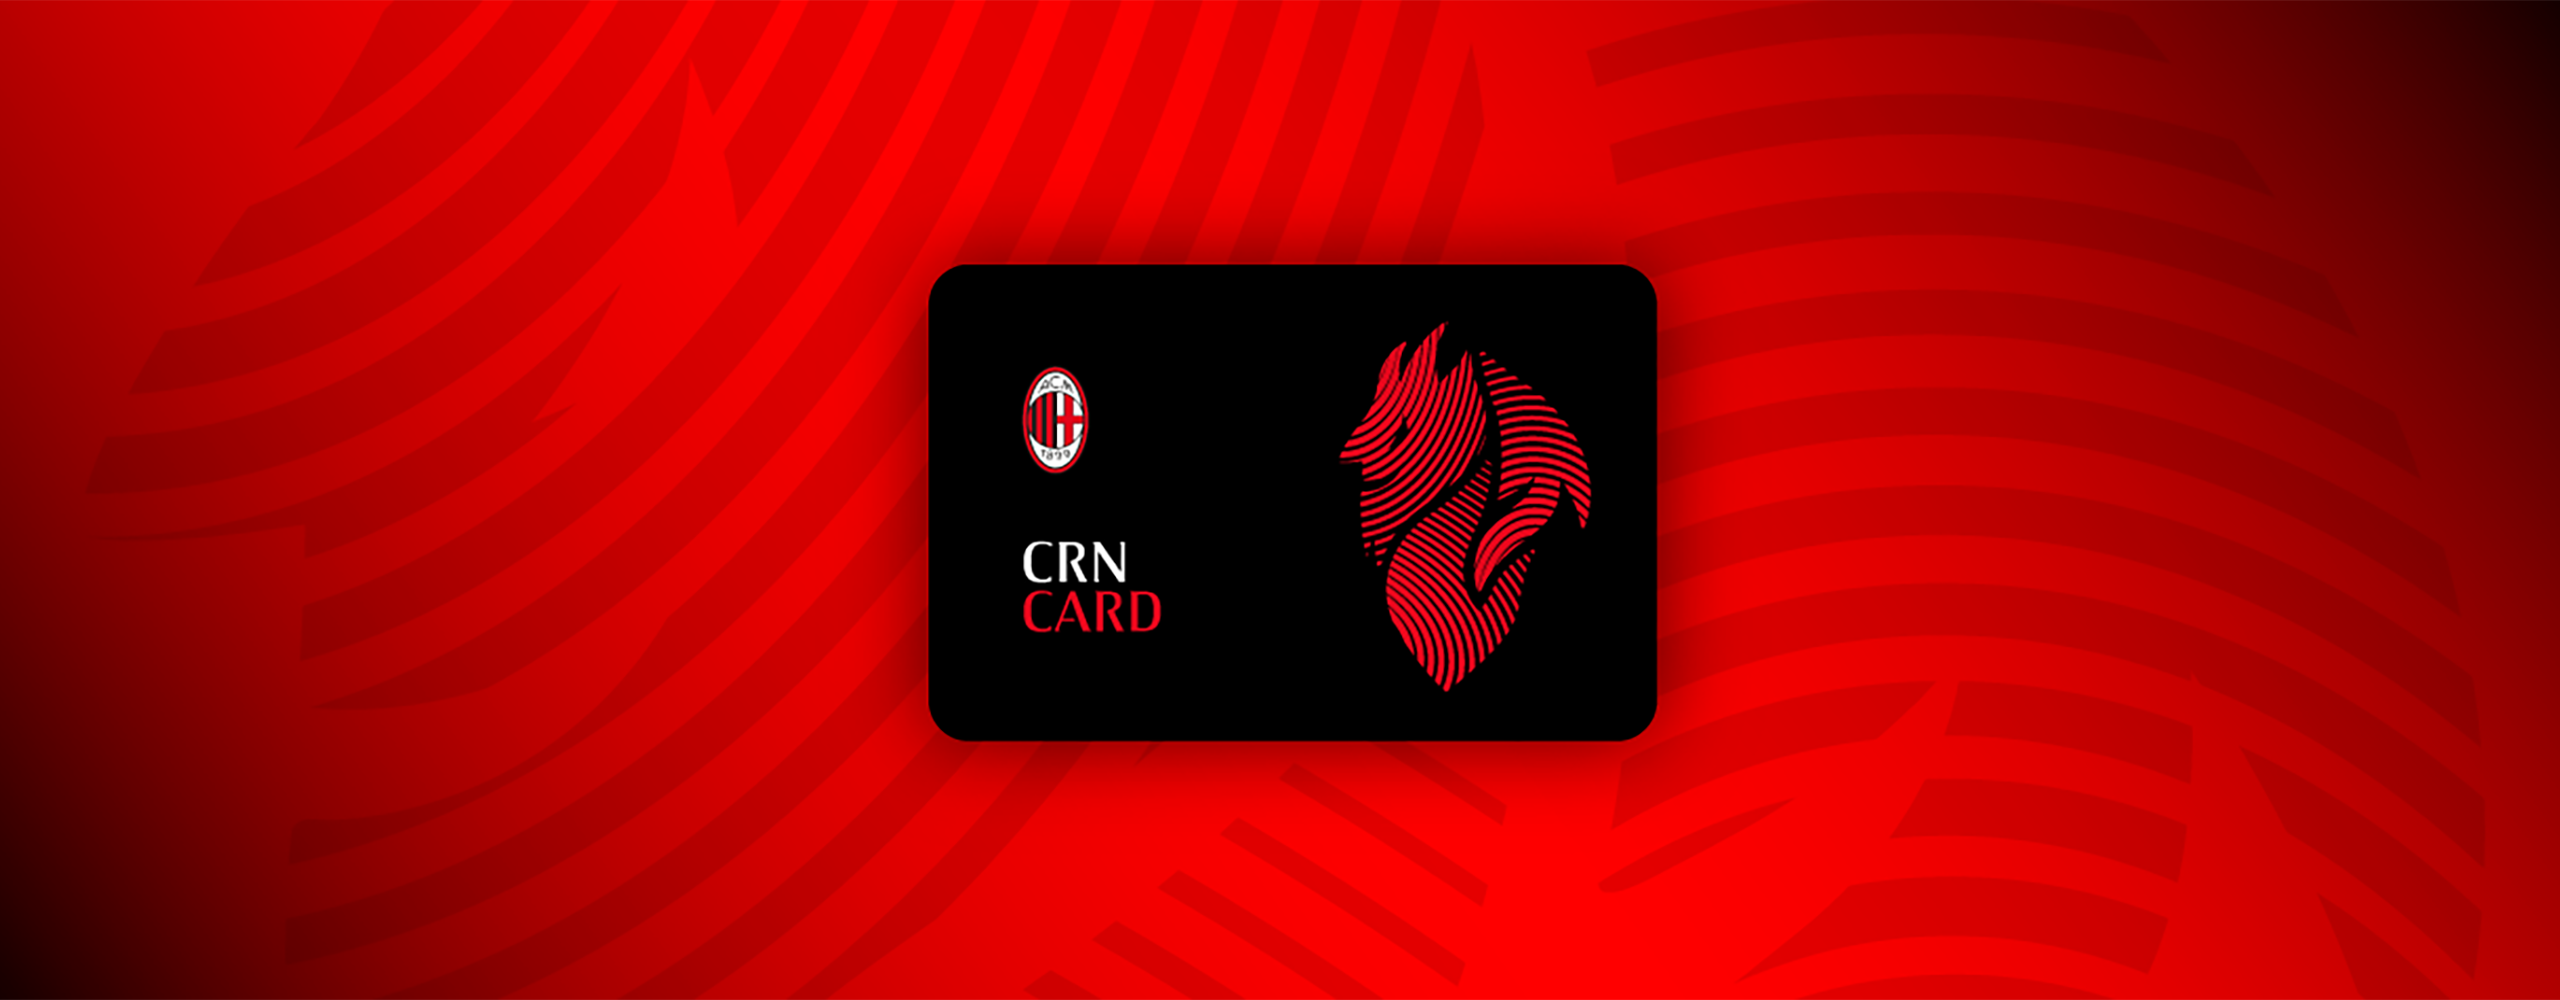 AC Milan CRN Card: Info